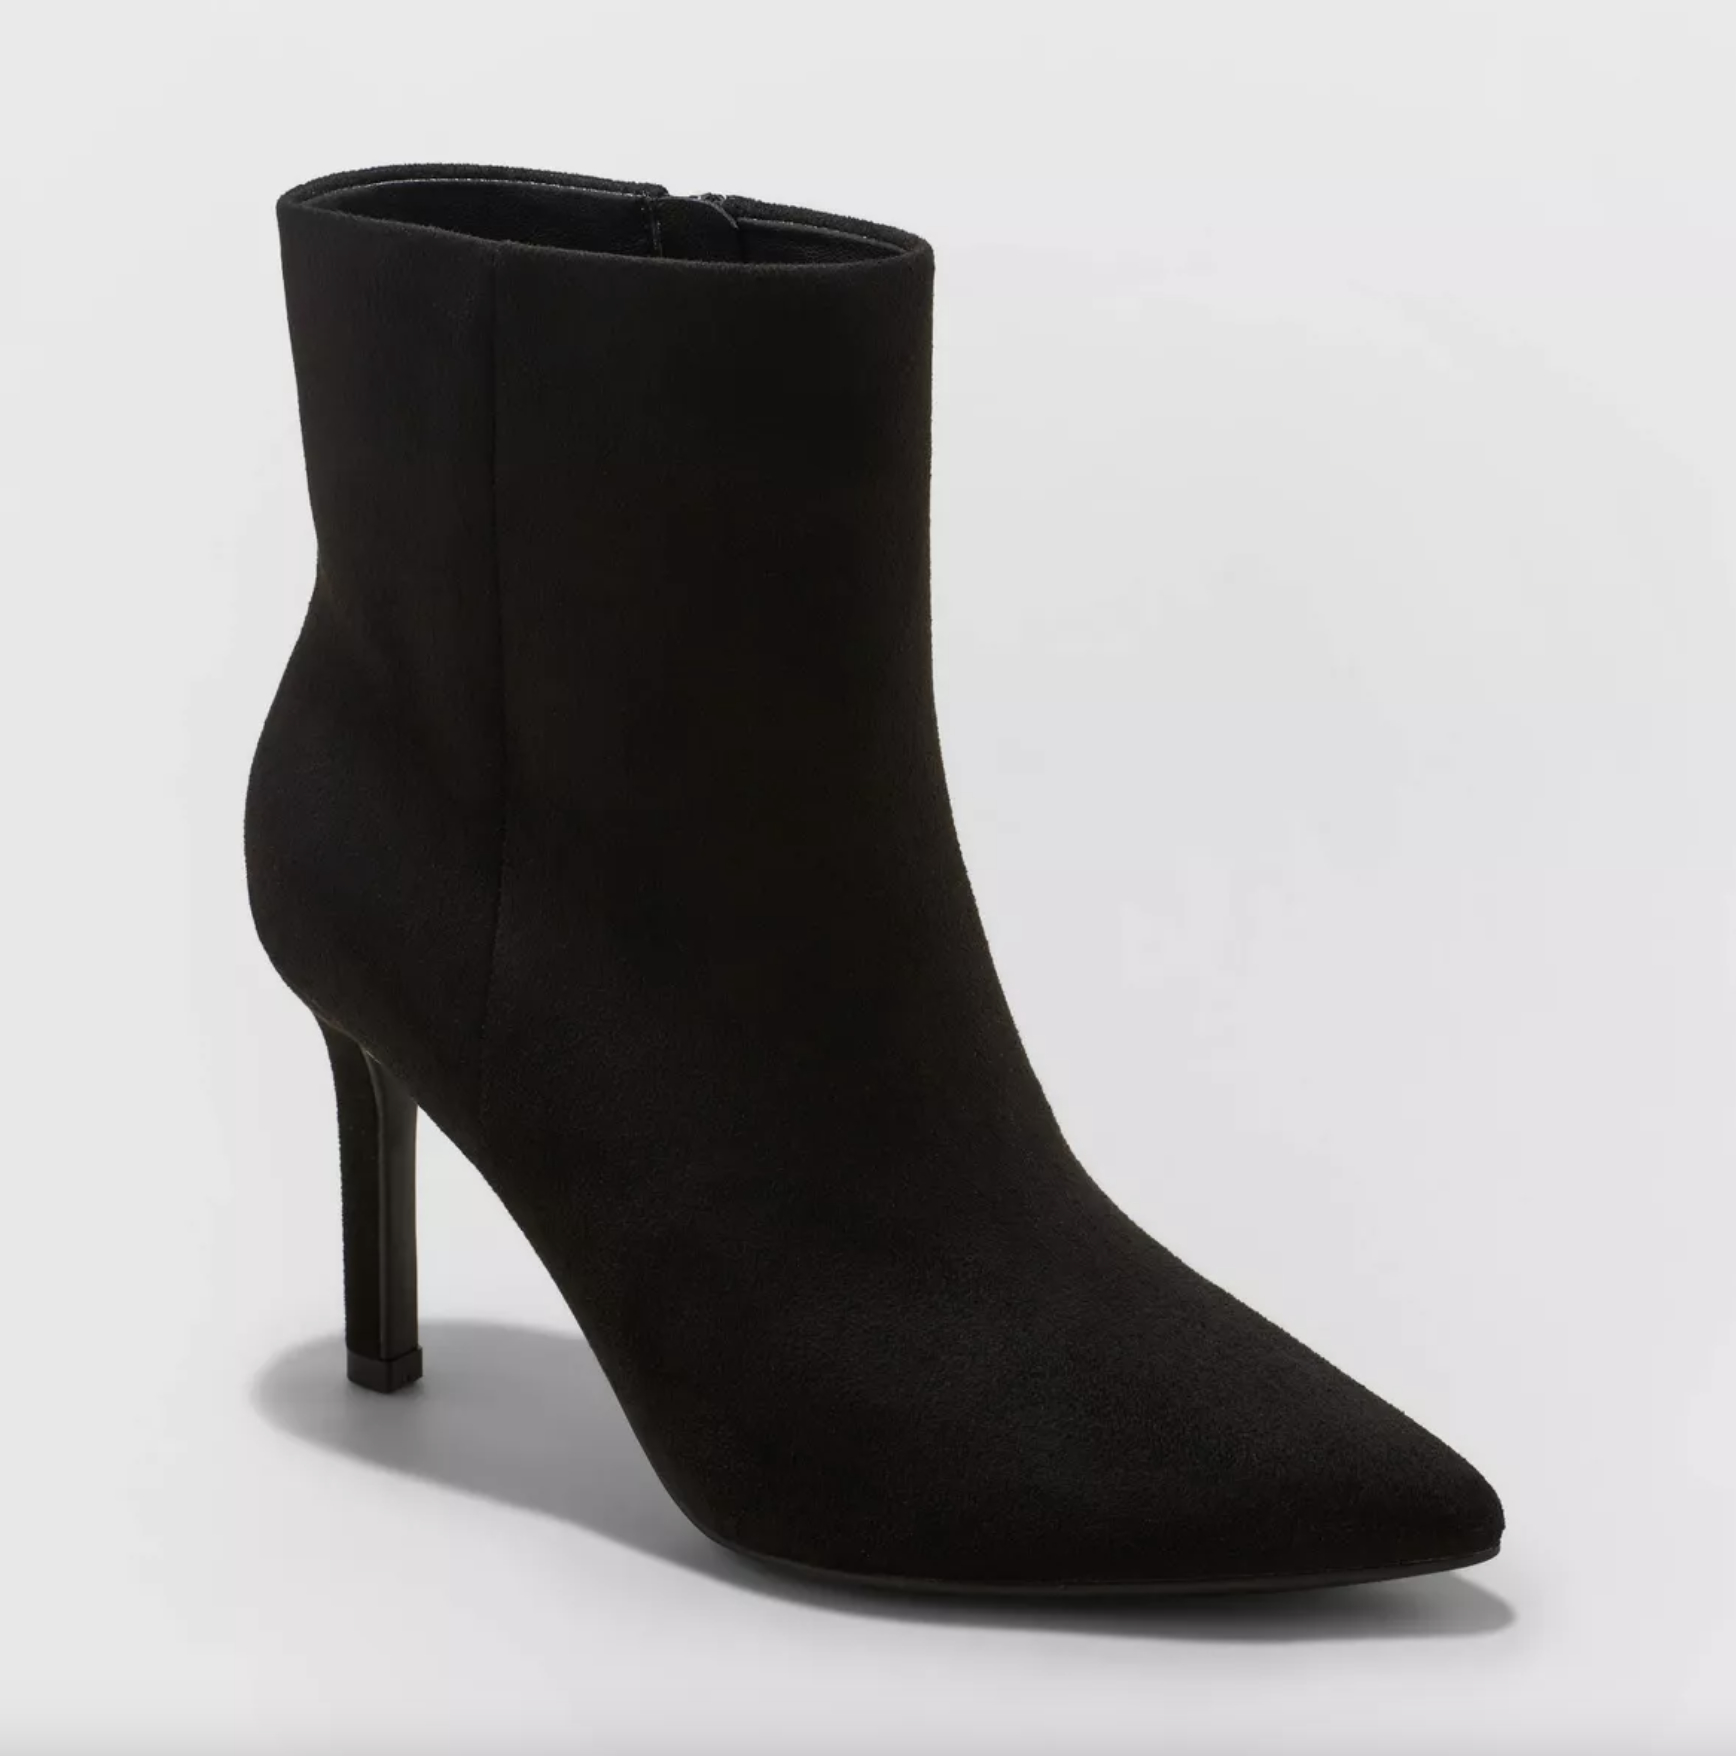 the heeled stiletto boot